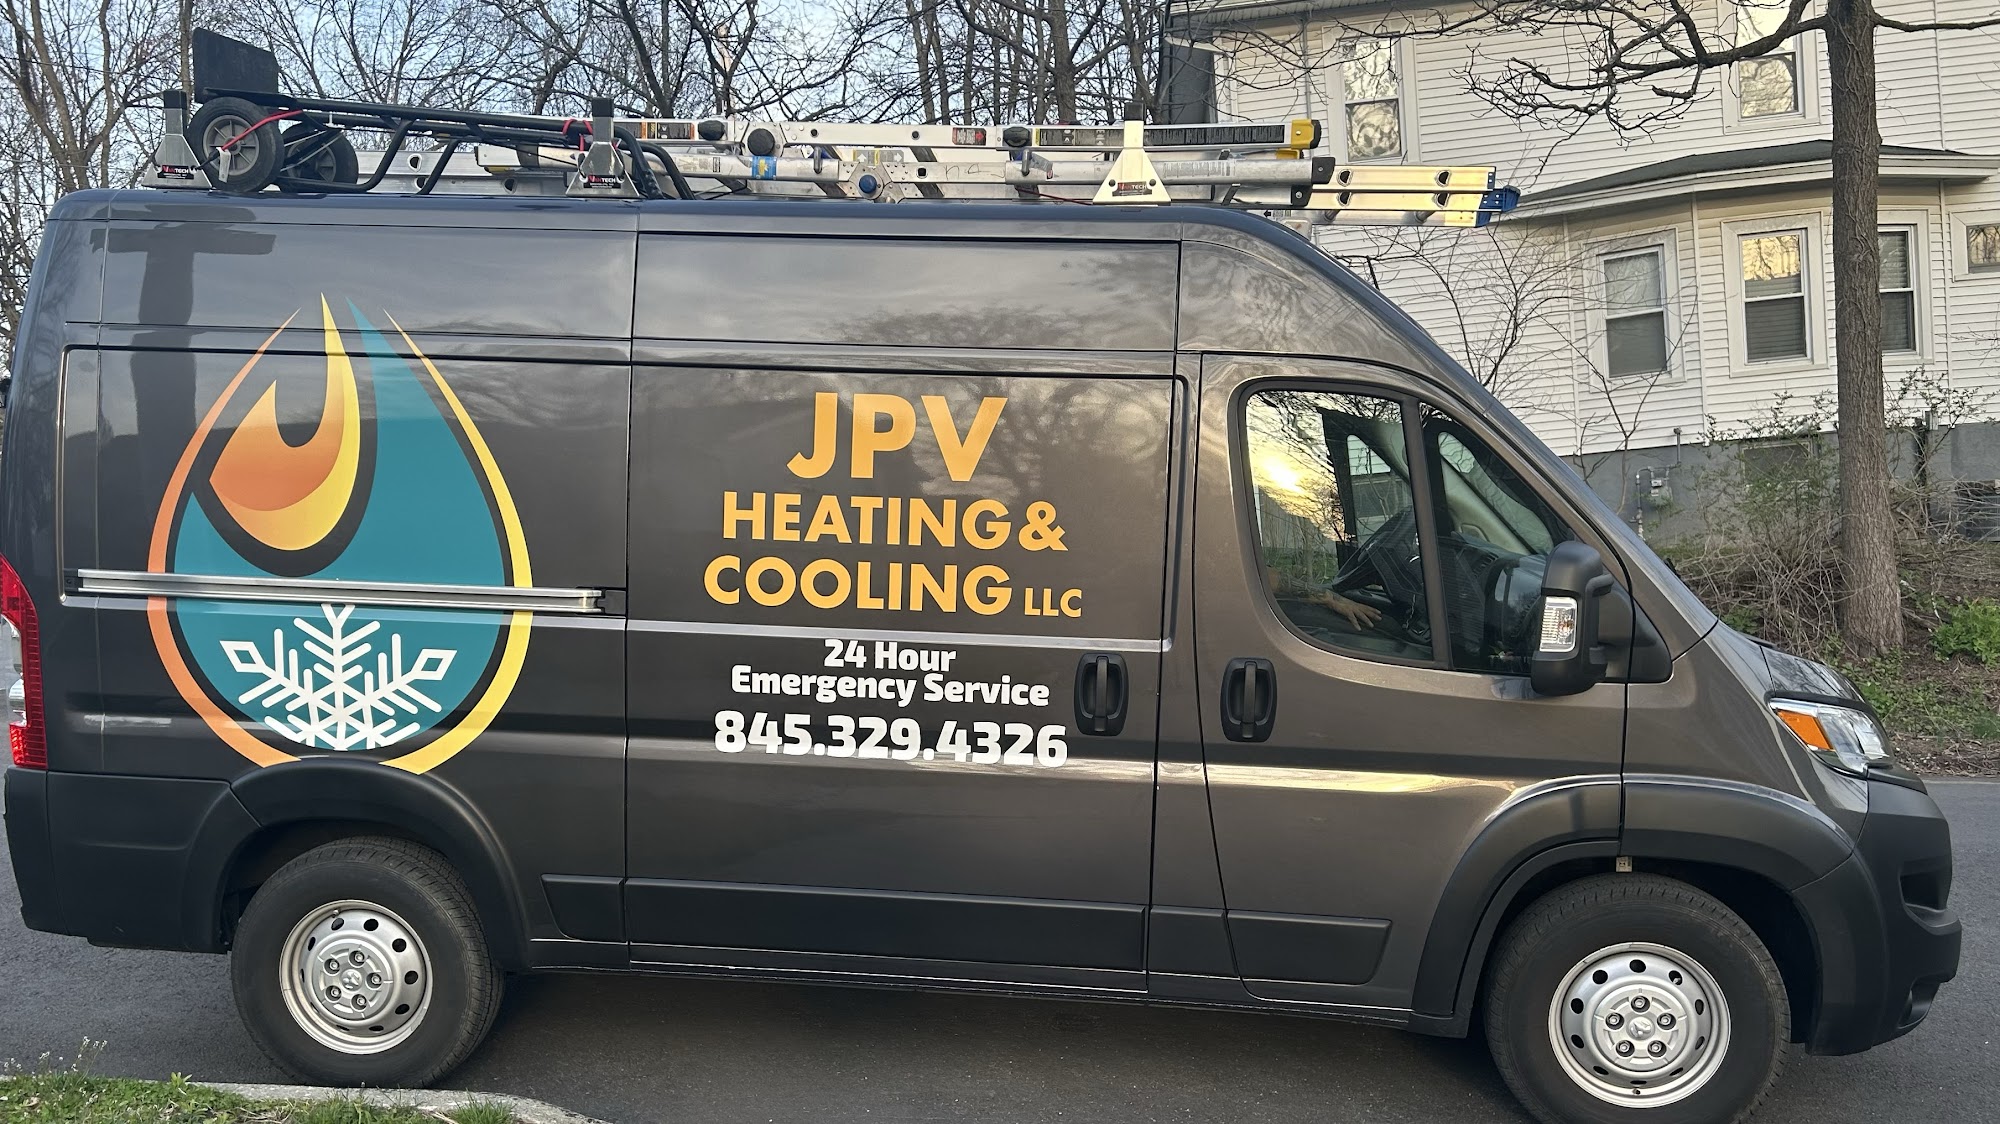 JPV heating and cooling LLC